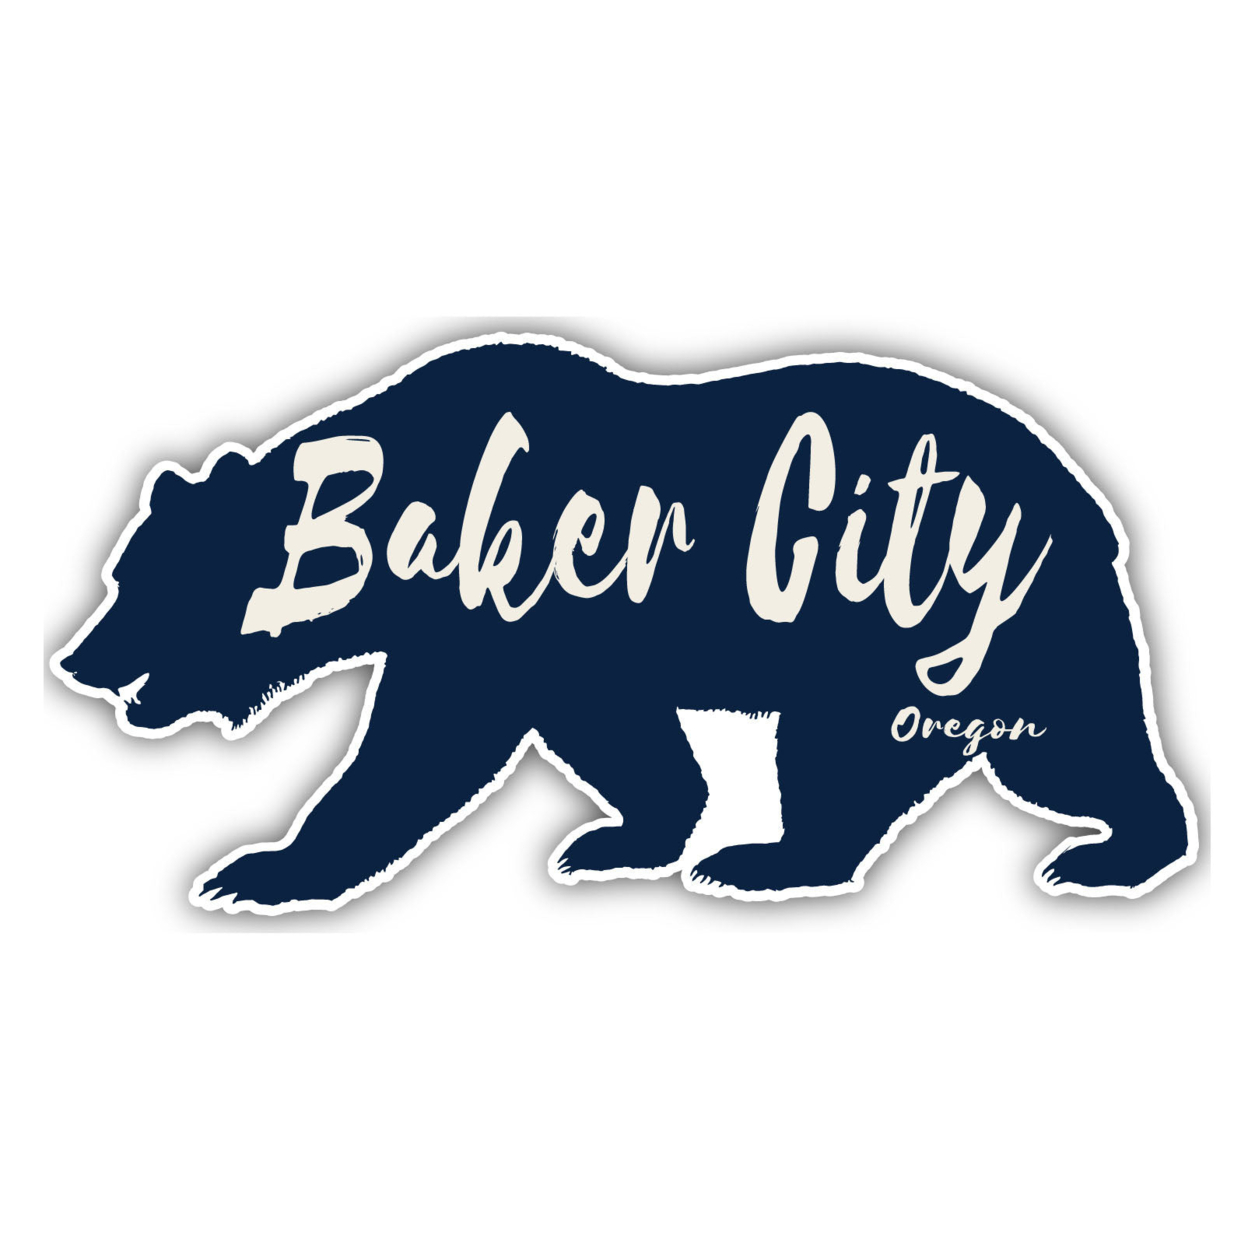 Baker City Oregon Souvenir Decorative Stickers (Choose Theme And Size) - 4-Pack, 12-Inch, Bear